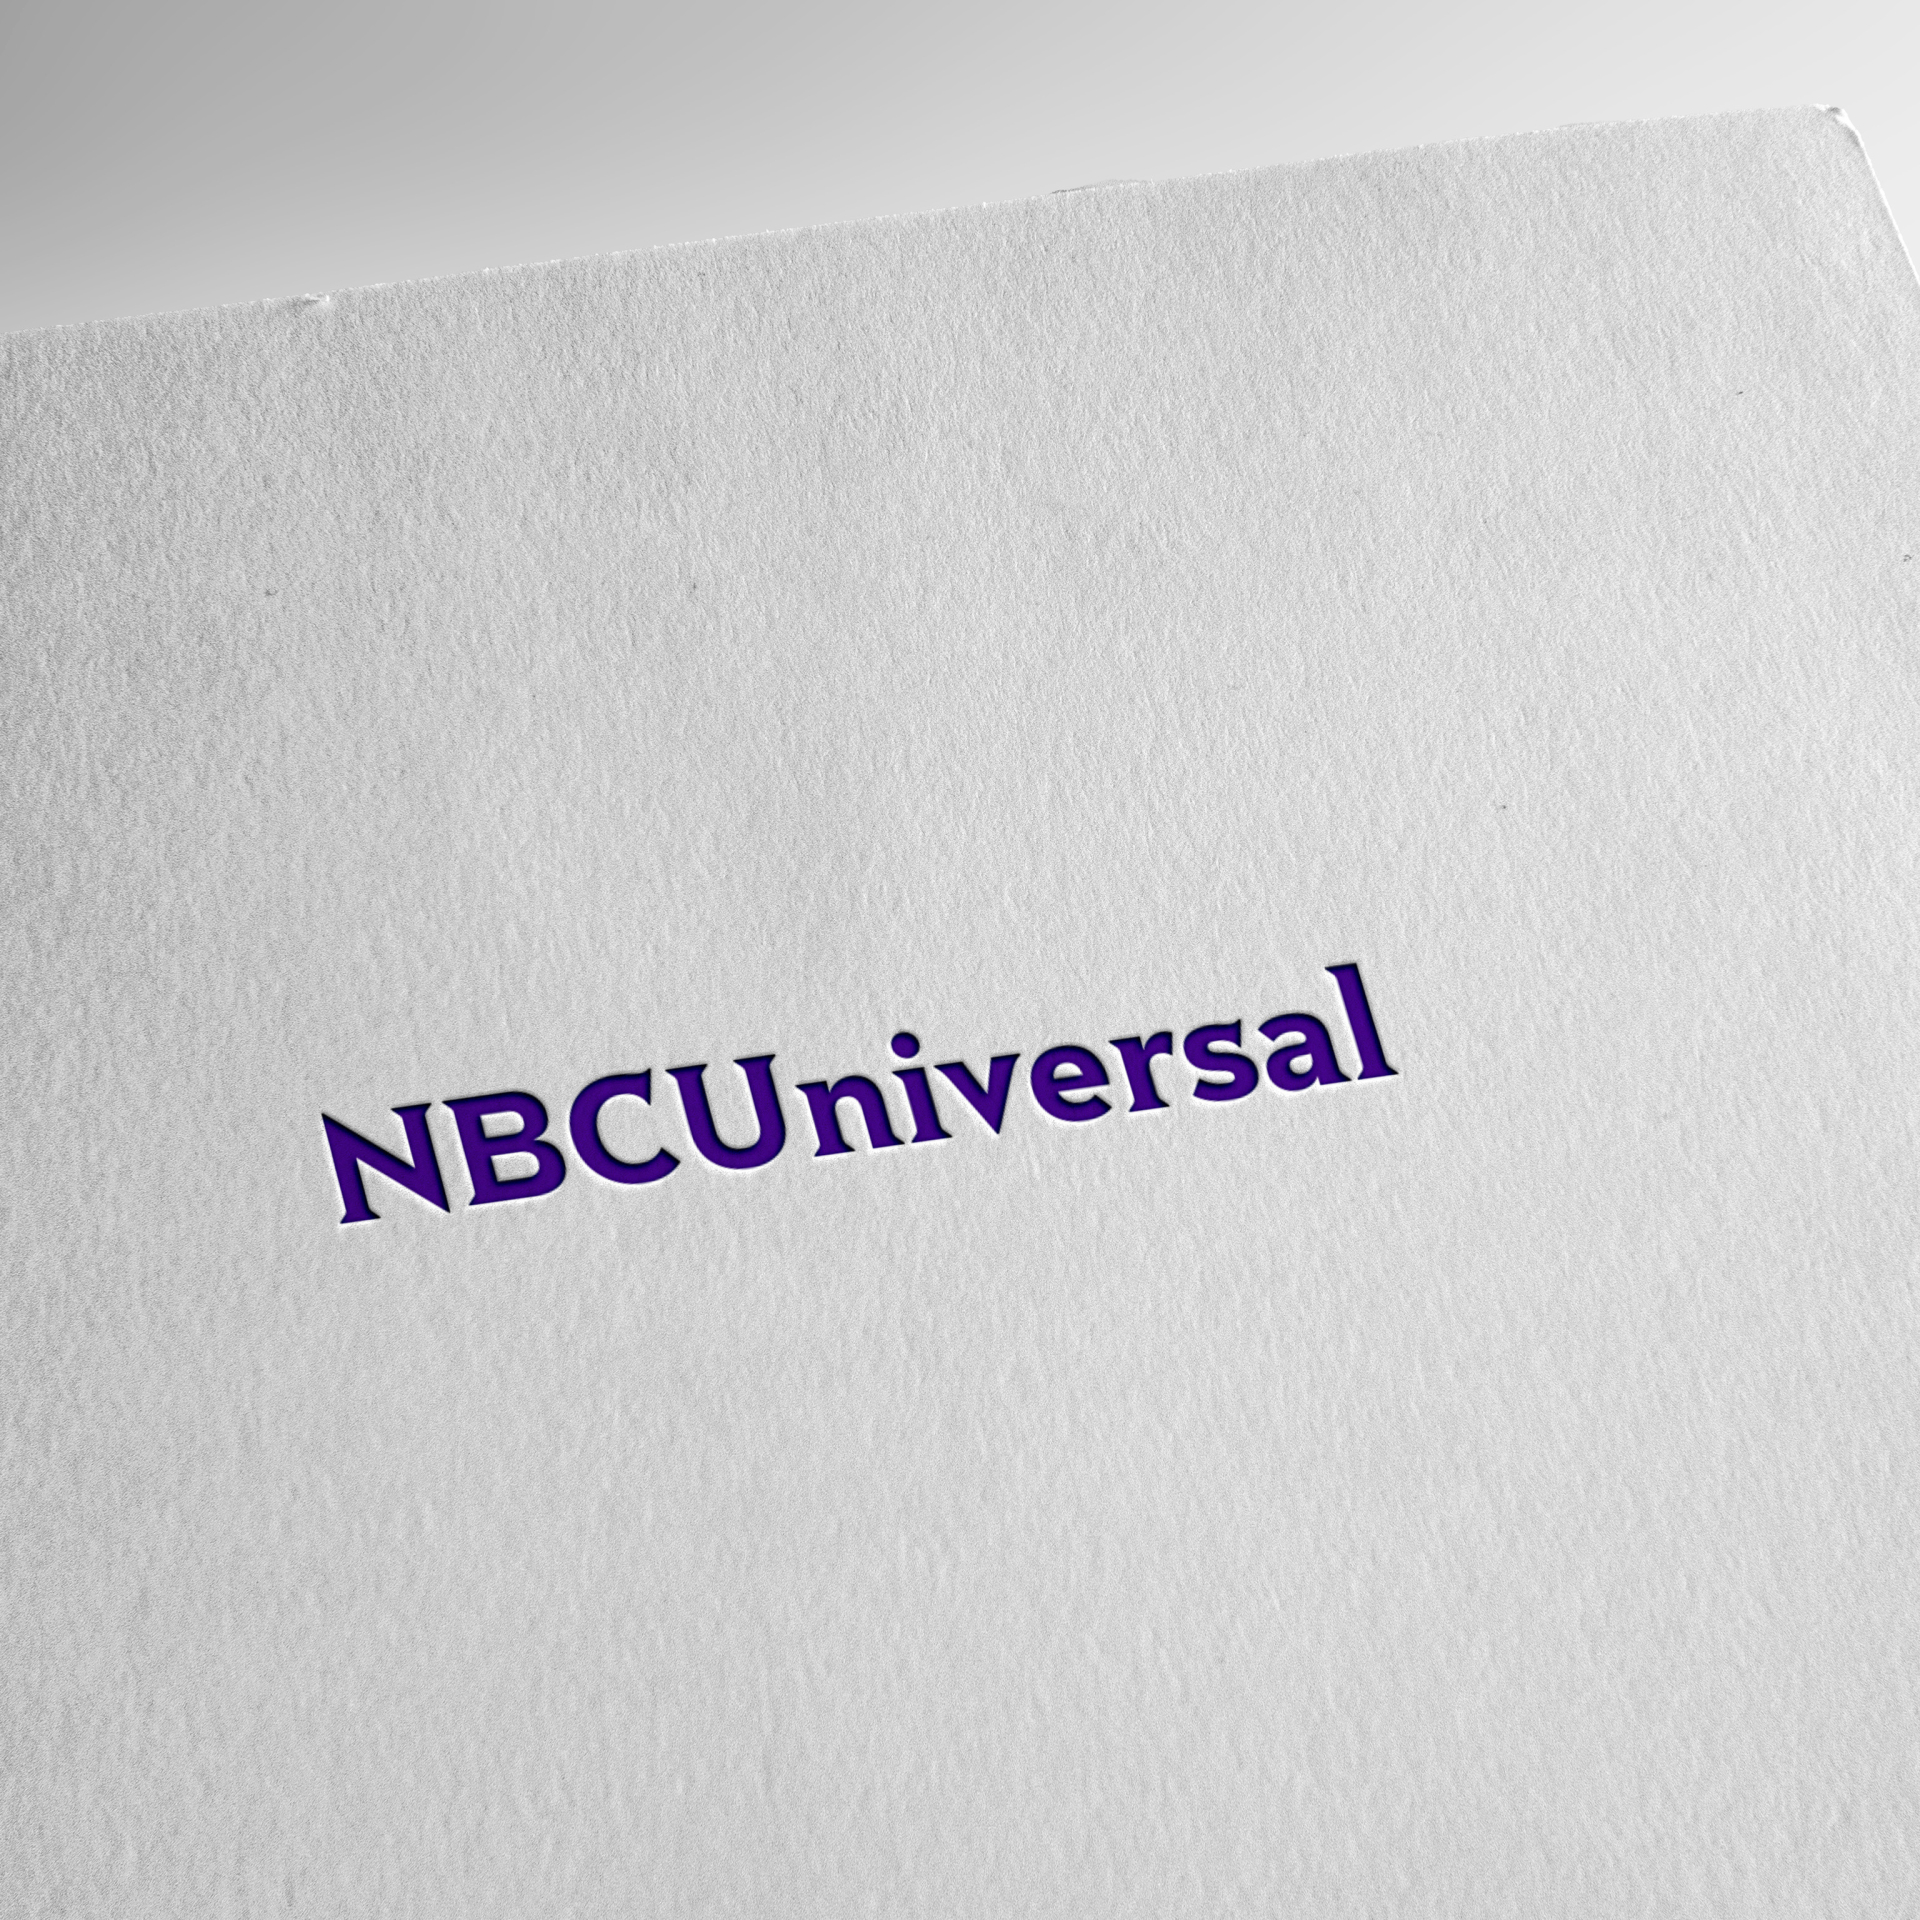 Image of NBC Universal logo on paper